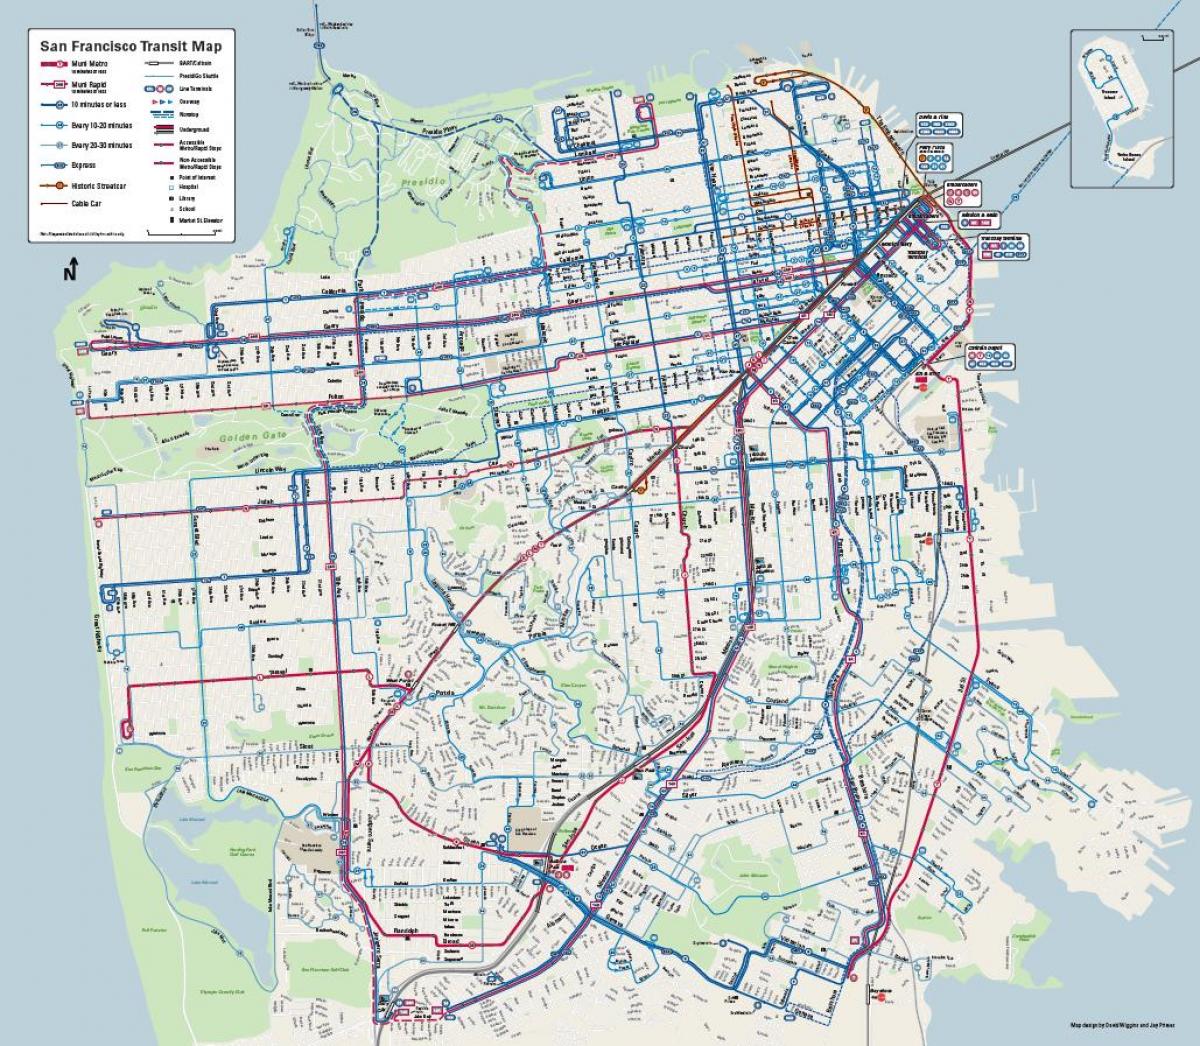 San Francisco bas sistem peta